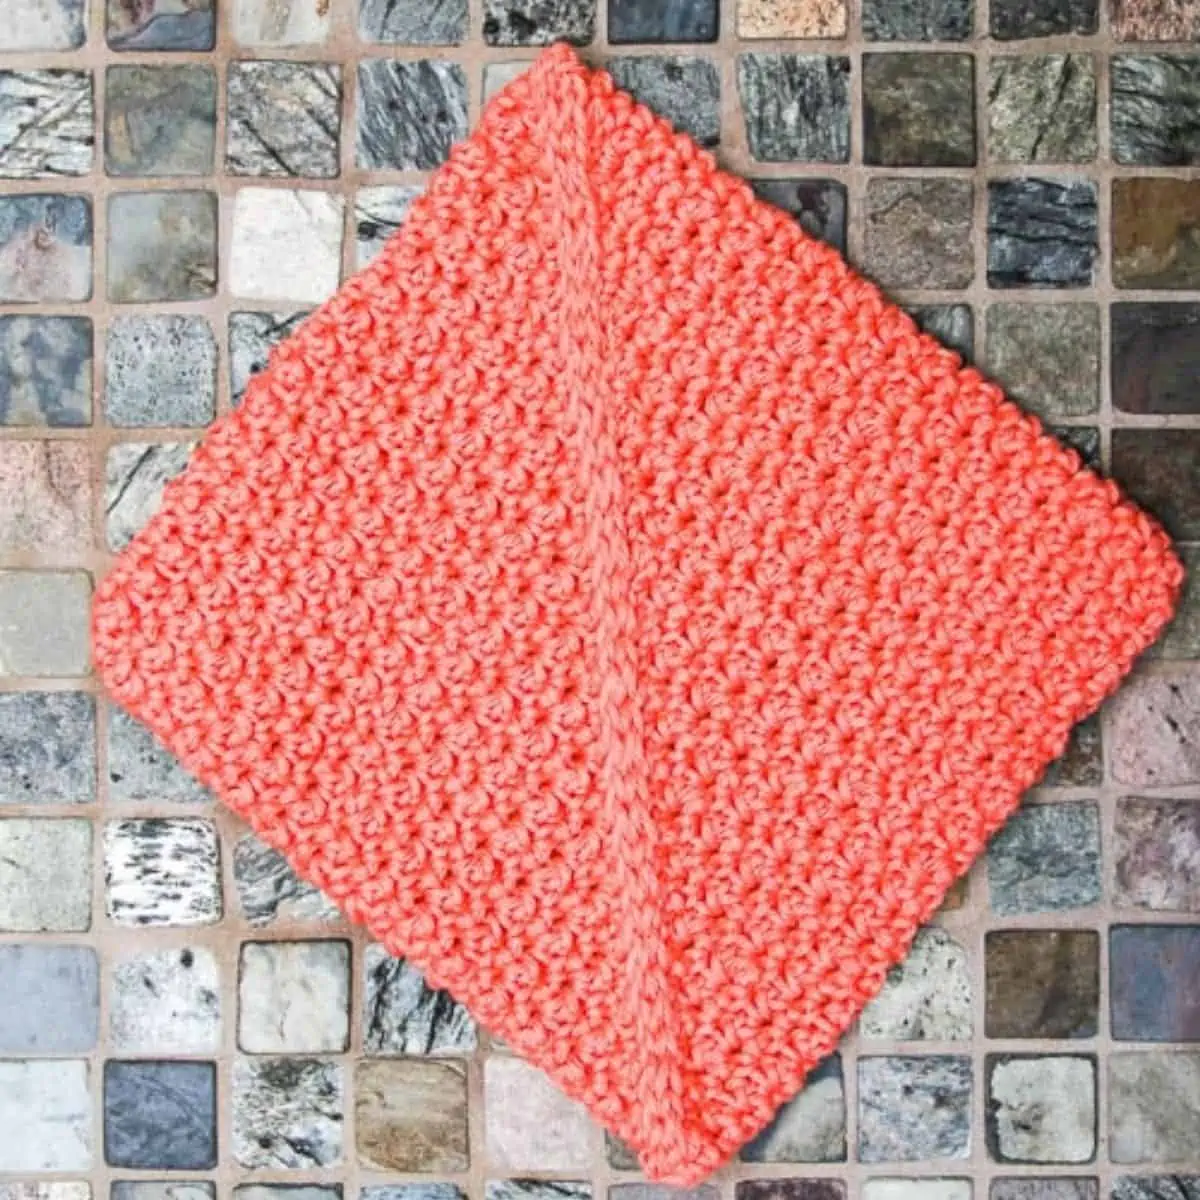 https://www.stitching-together.com/wp-content/uploads/2022/02/magic-potholder-crochet-pattern.webp